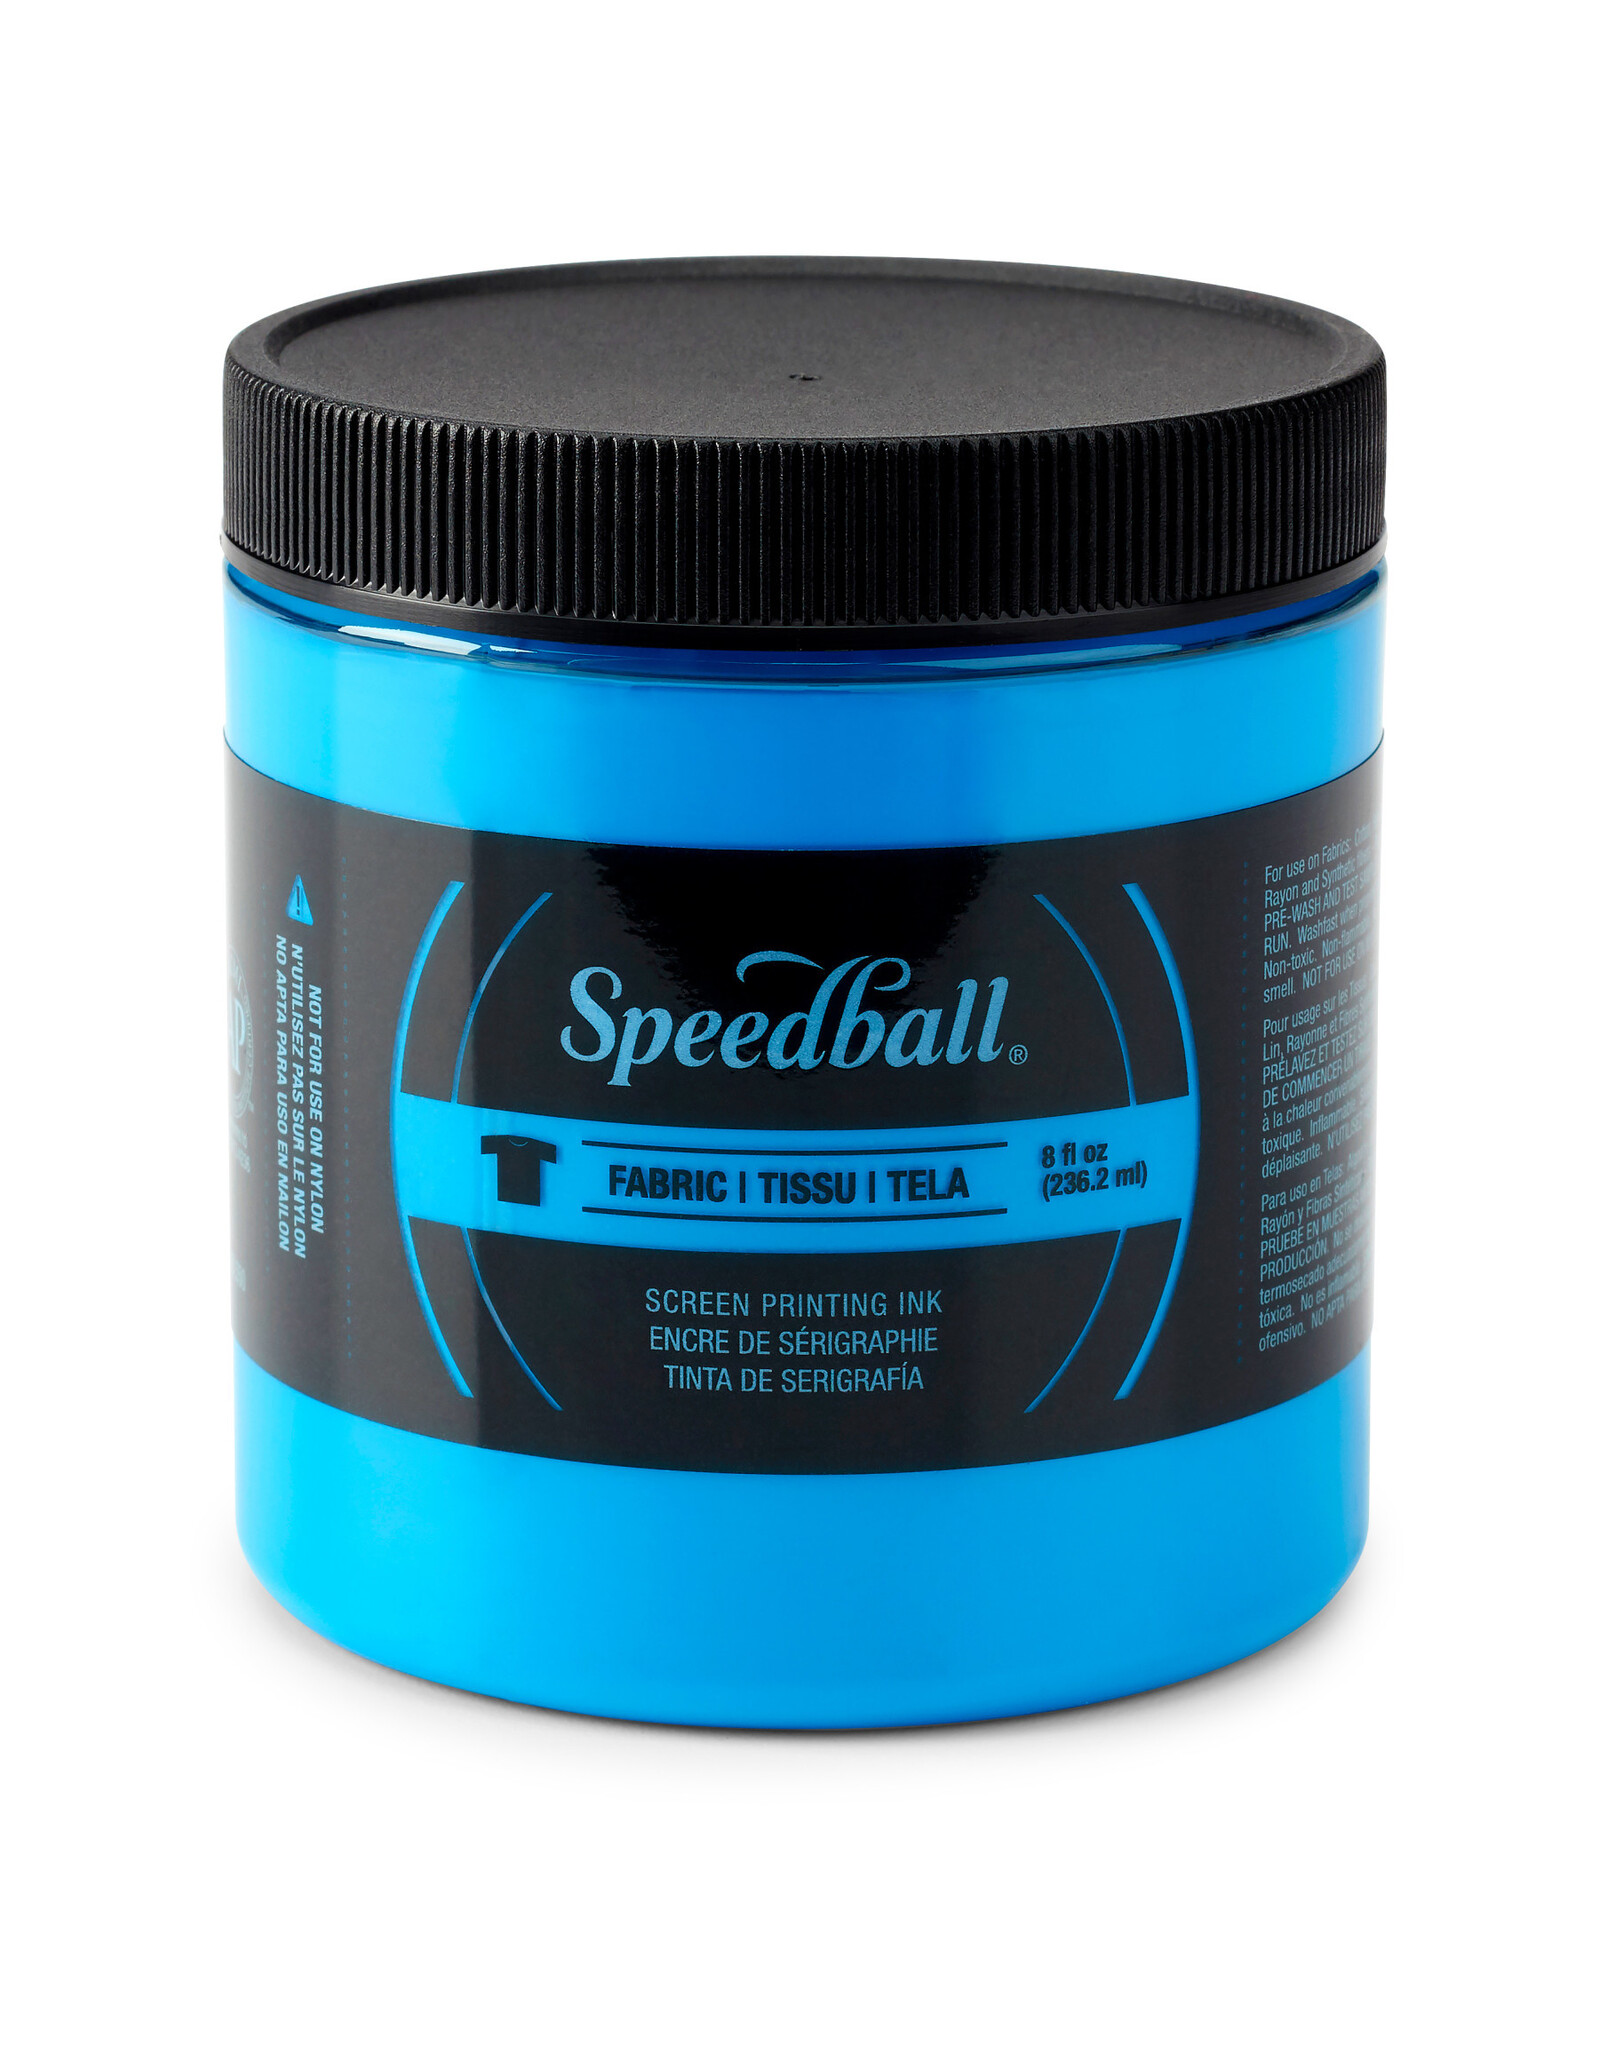 SPEEDBALL ART PRODUCTS Speedball Fabric Screen Printing Ink, Fluorescent Blue, 8oz